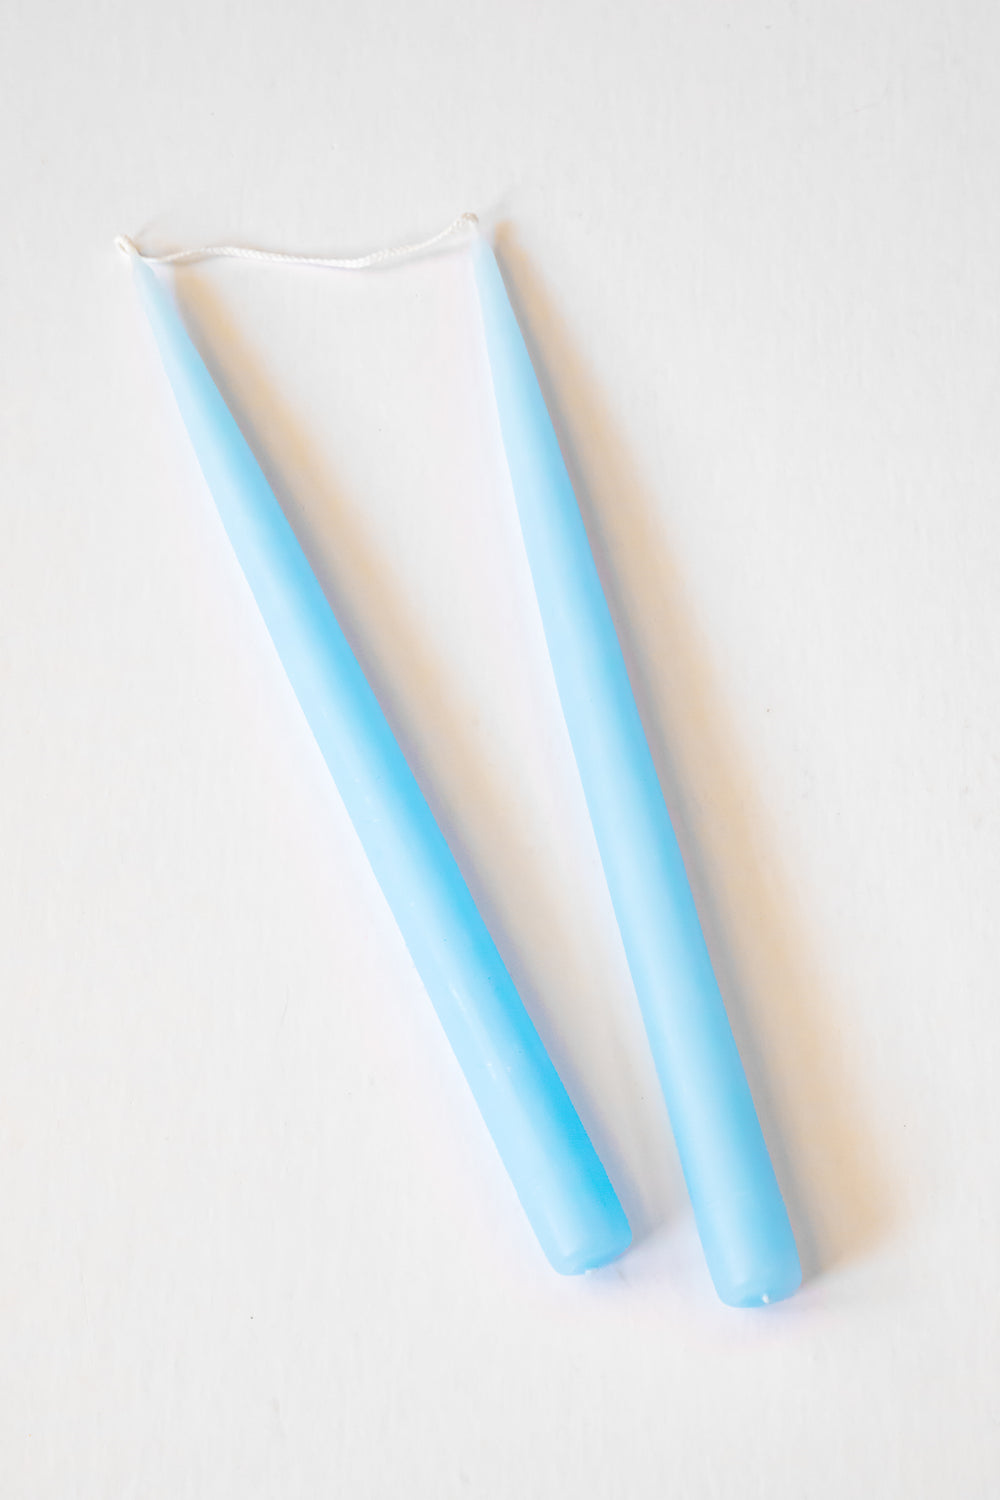 Ice Blue Candlesticks